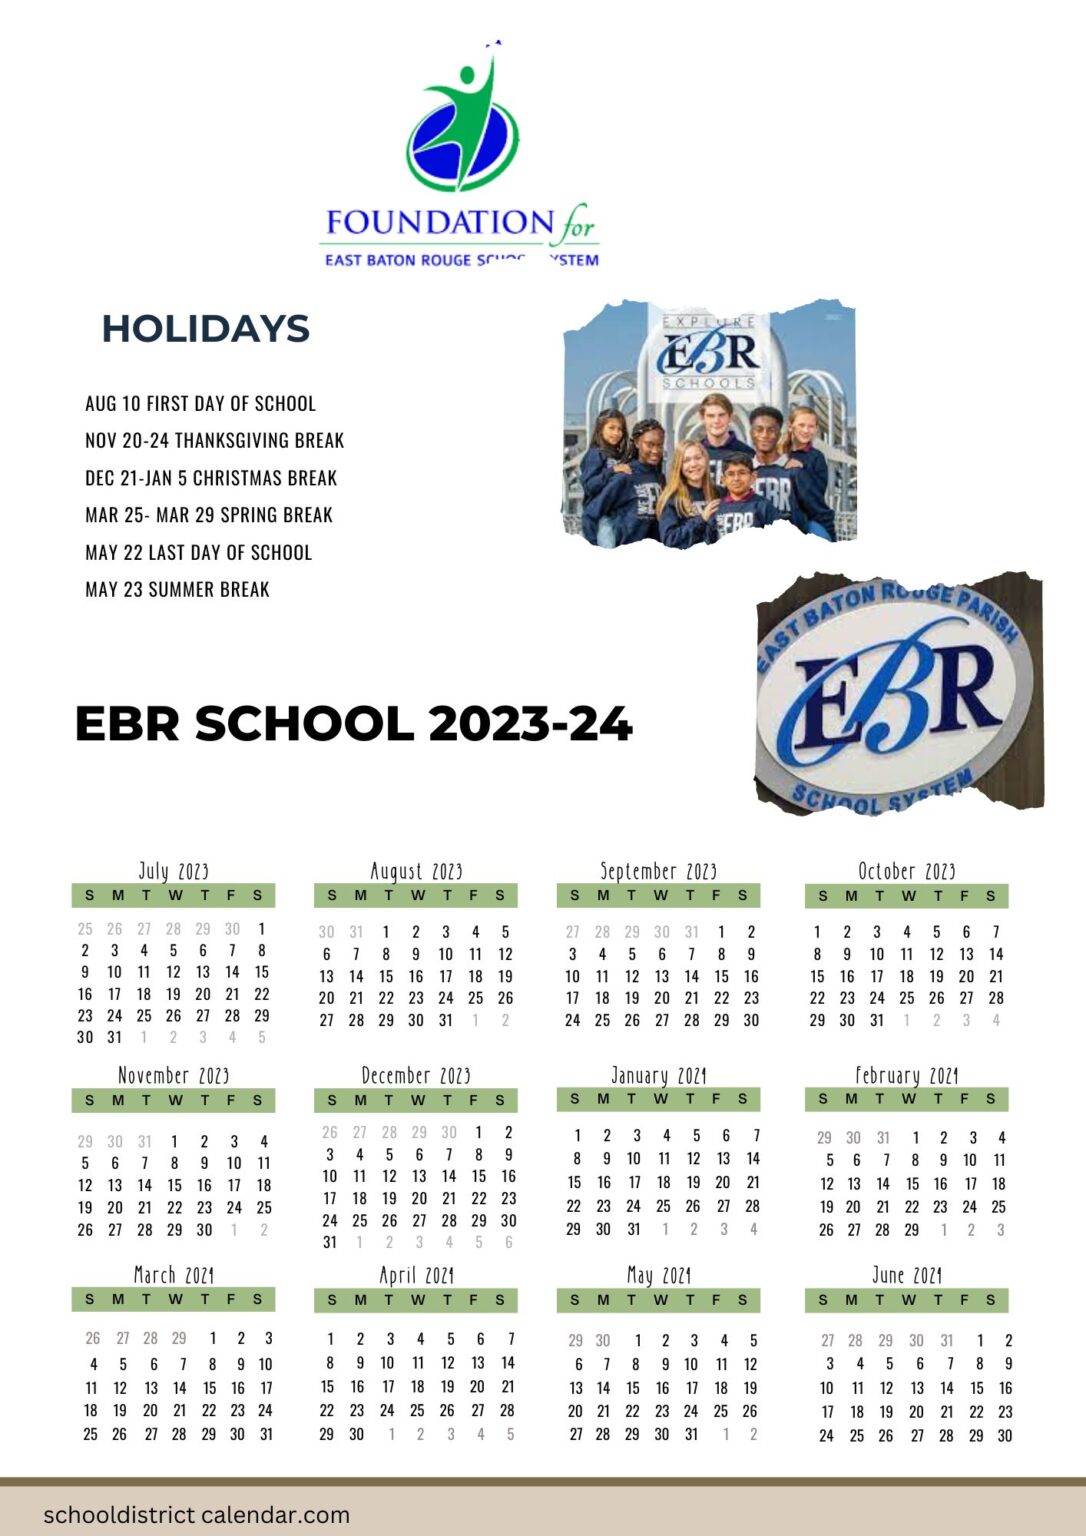 ebr-schools-calendar-holidays-2023-2024-east-baton-rouge